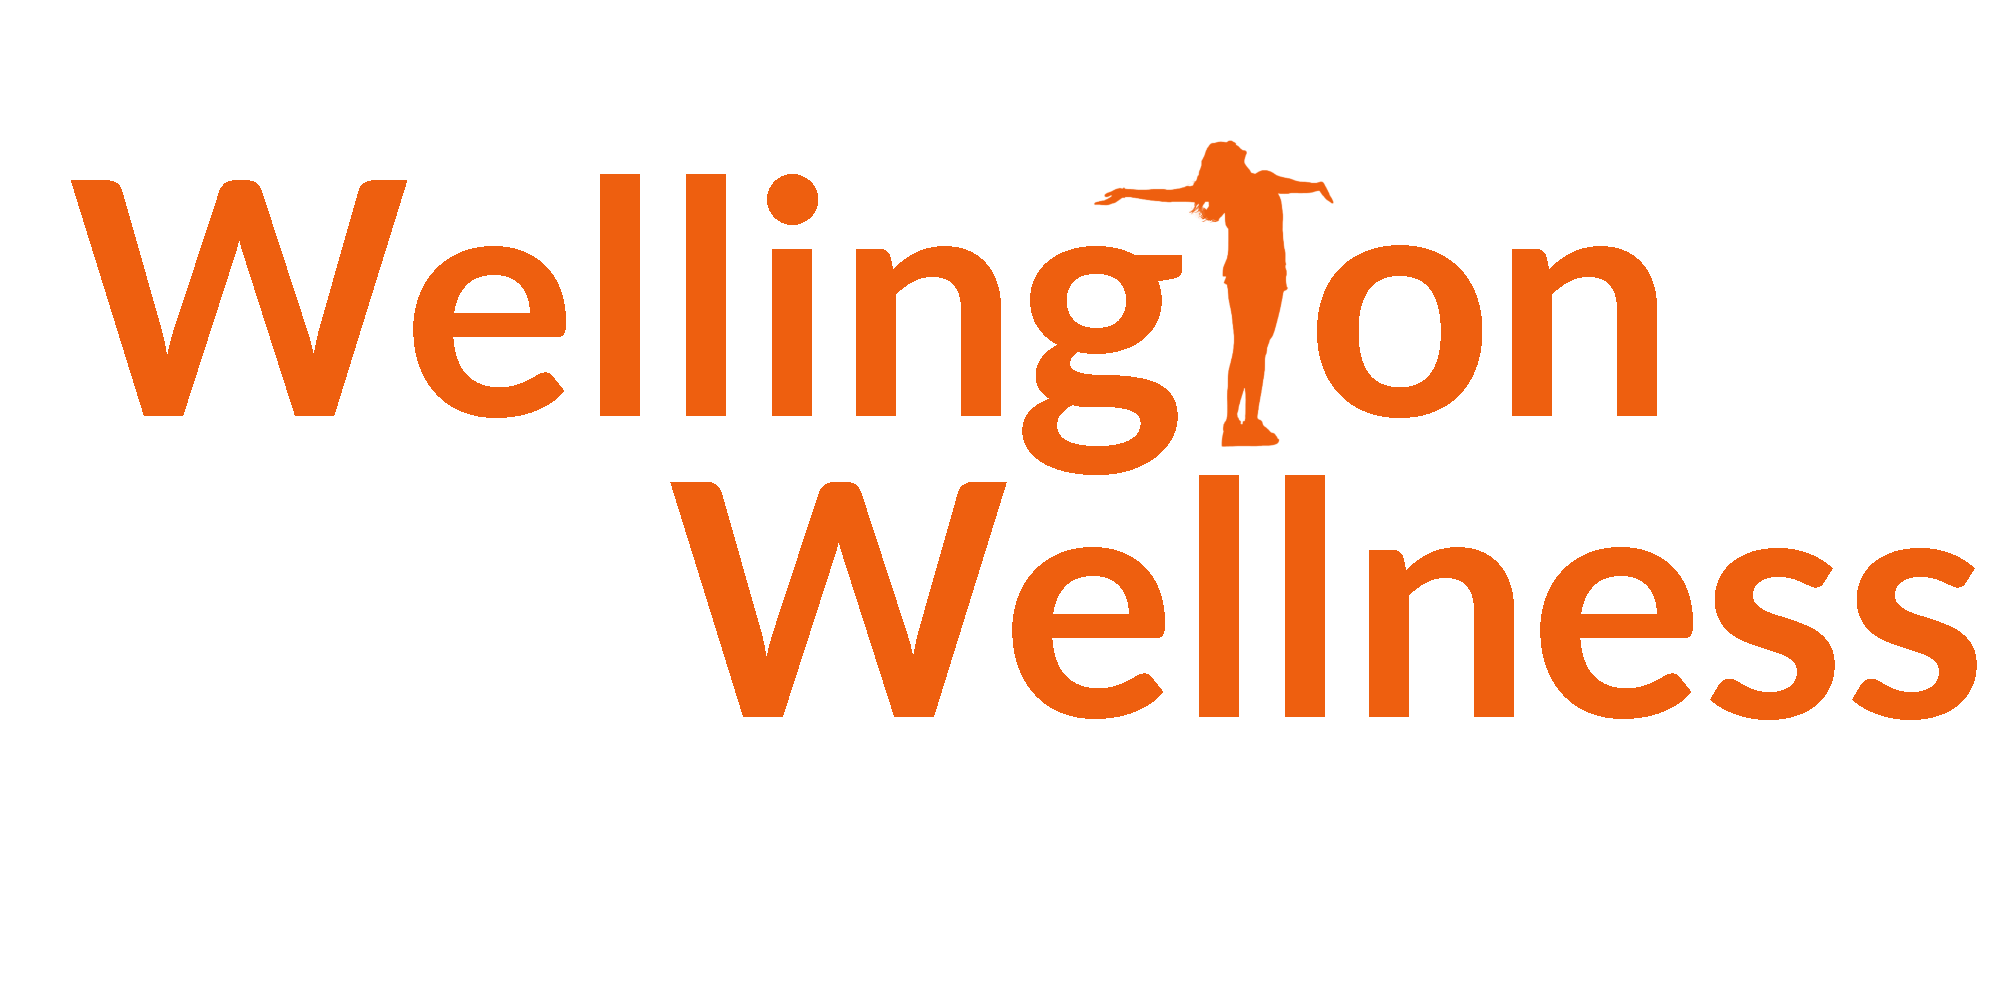 Grand Junction Wellington Wellness 3